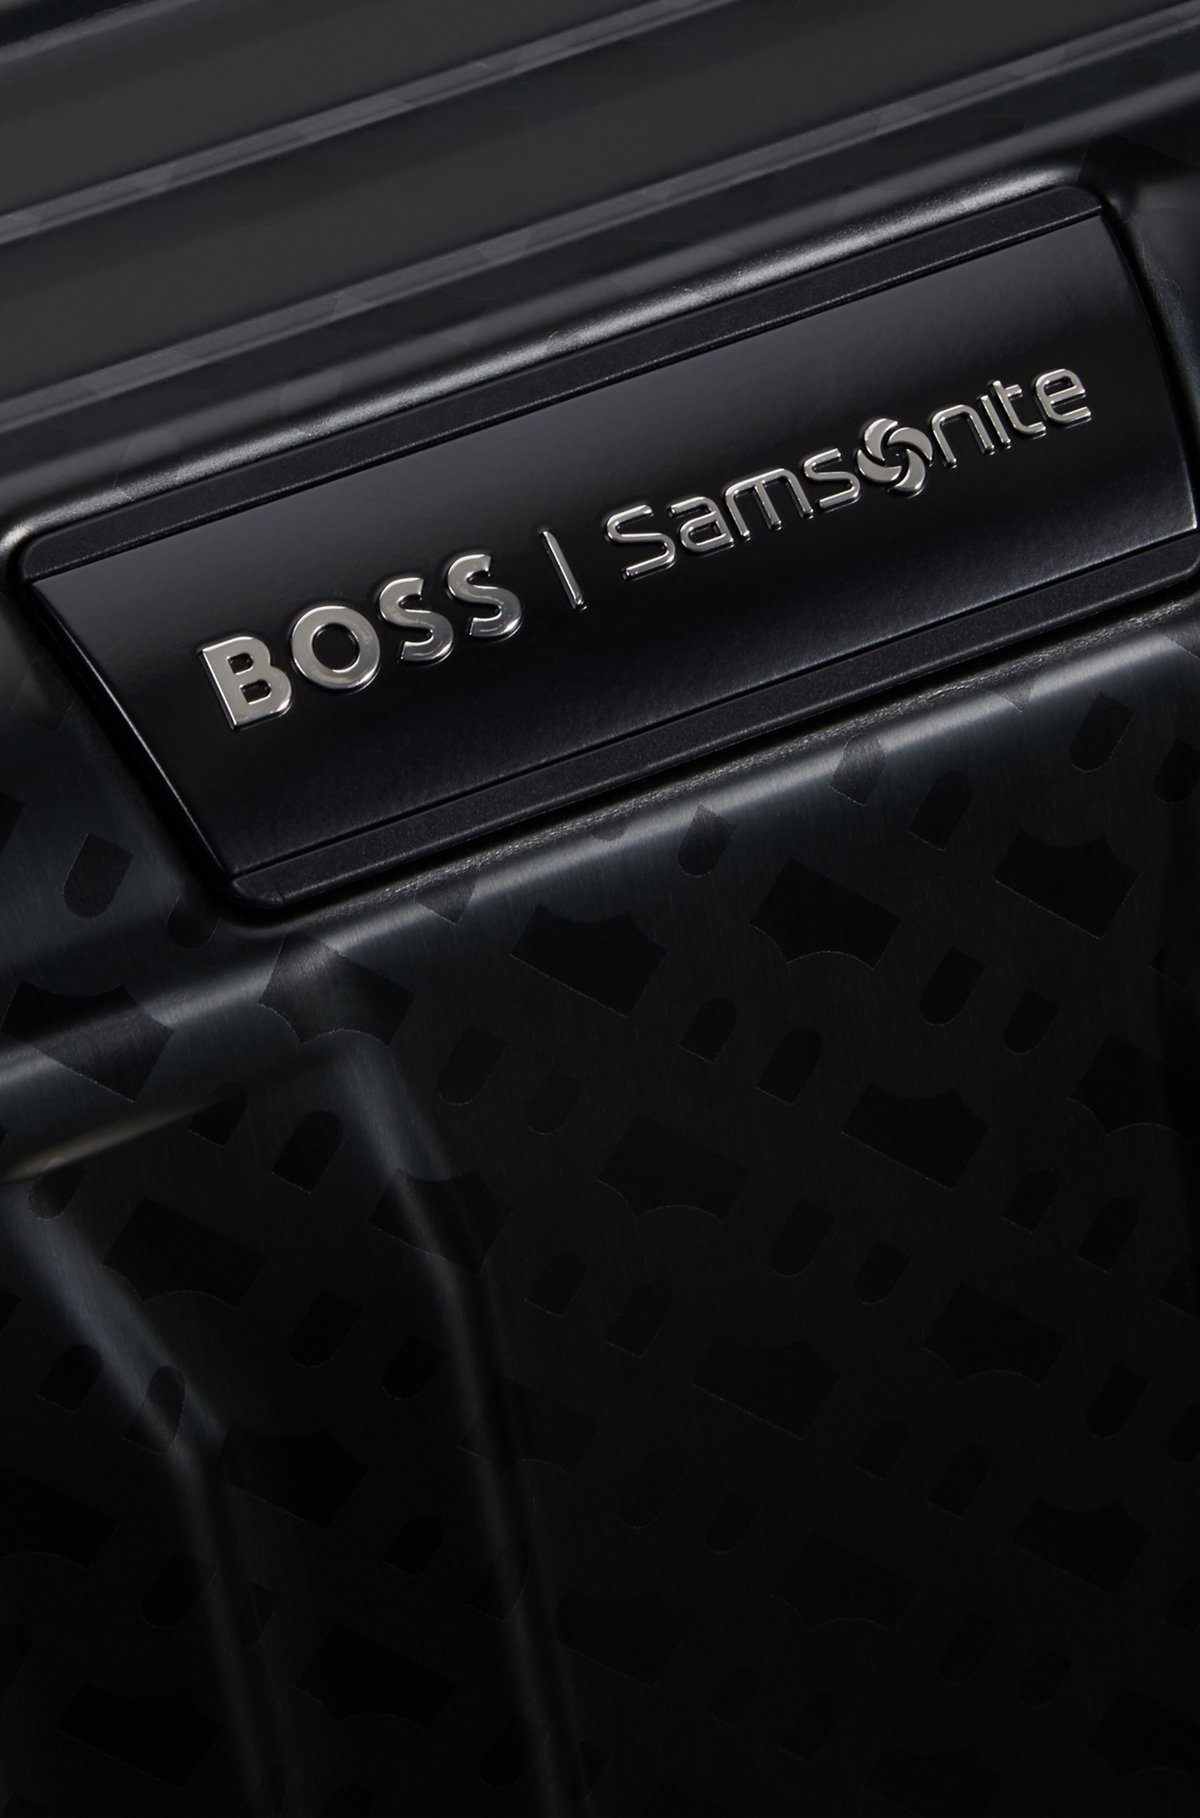 BOSS | Samsonite アノダイズドアルミニウム チェックインスーツケース モノグラム, ブラック